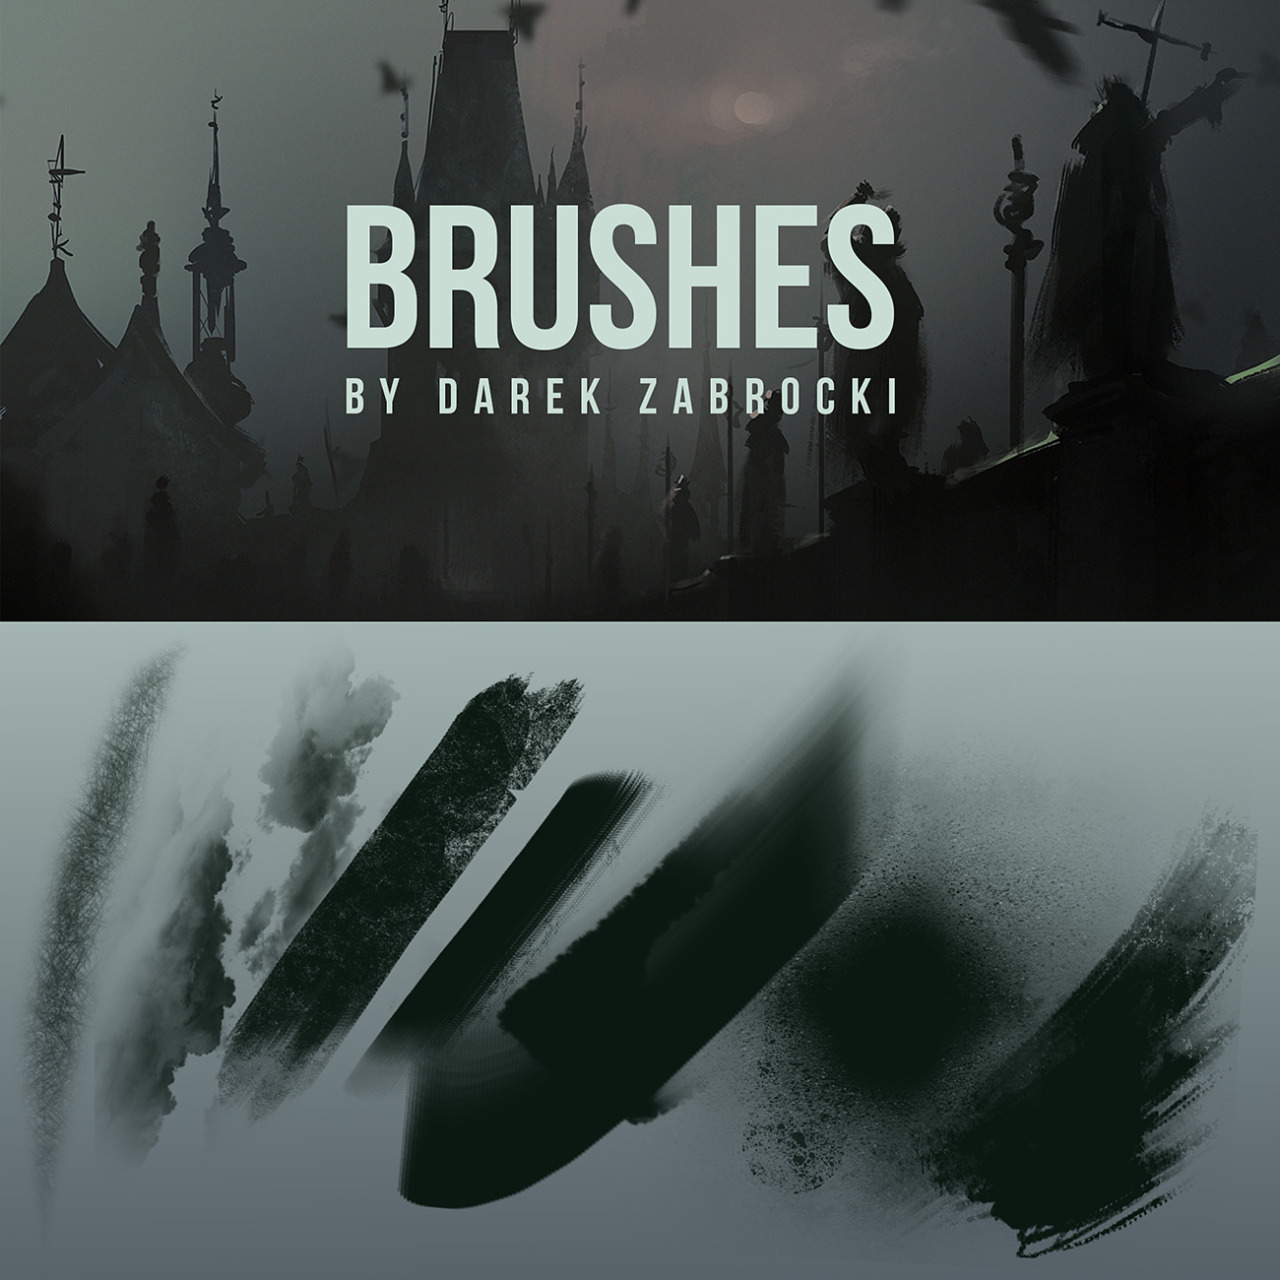 Darek Zabrocki Photoshop Brushes
DOWNLOAD HERE